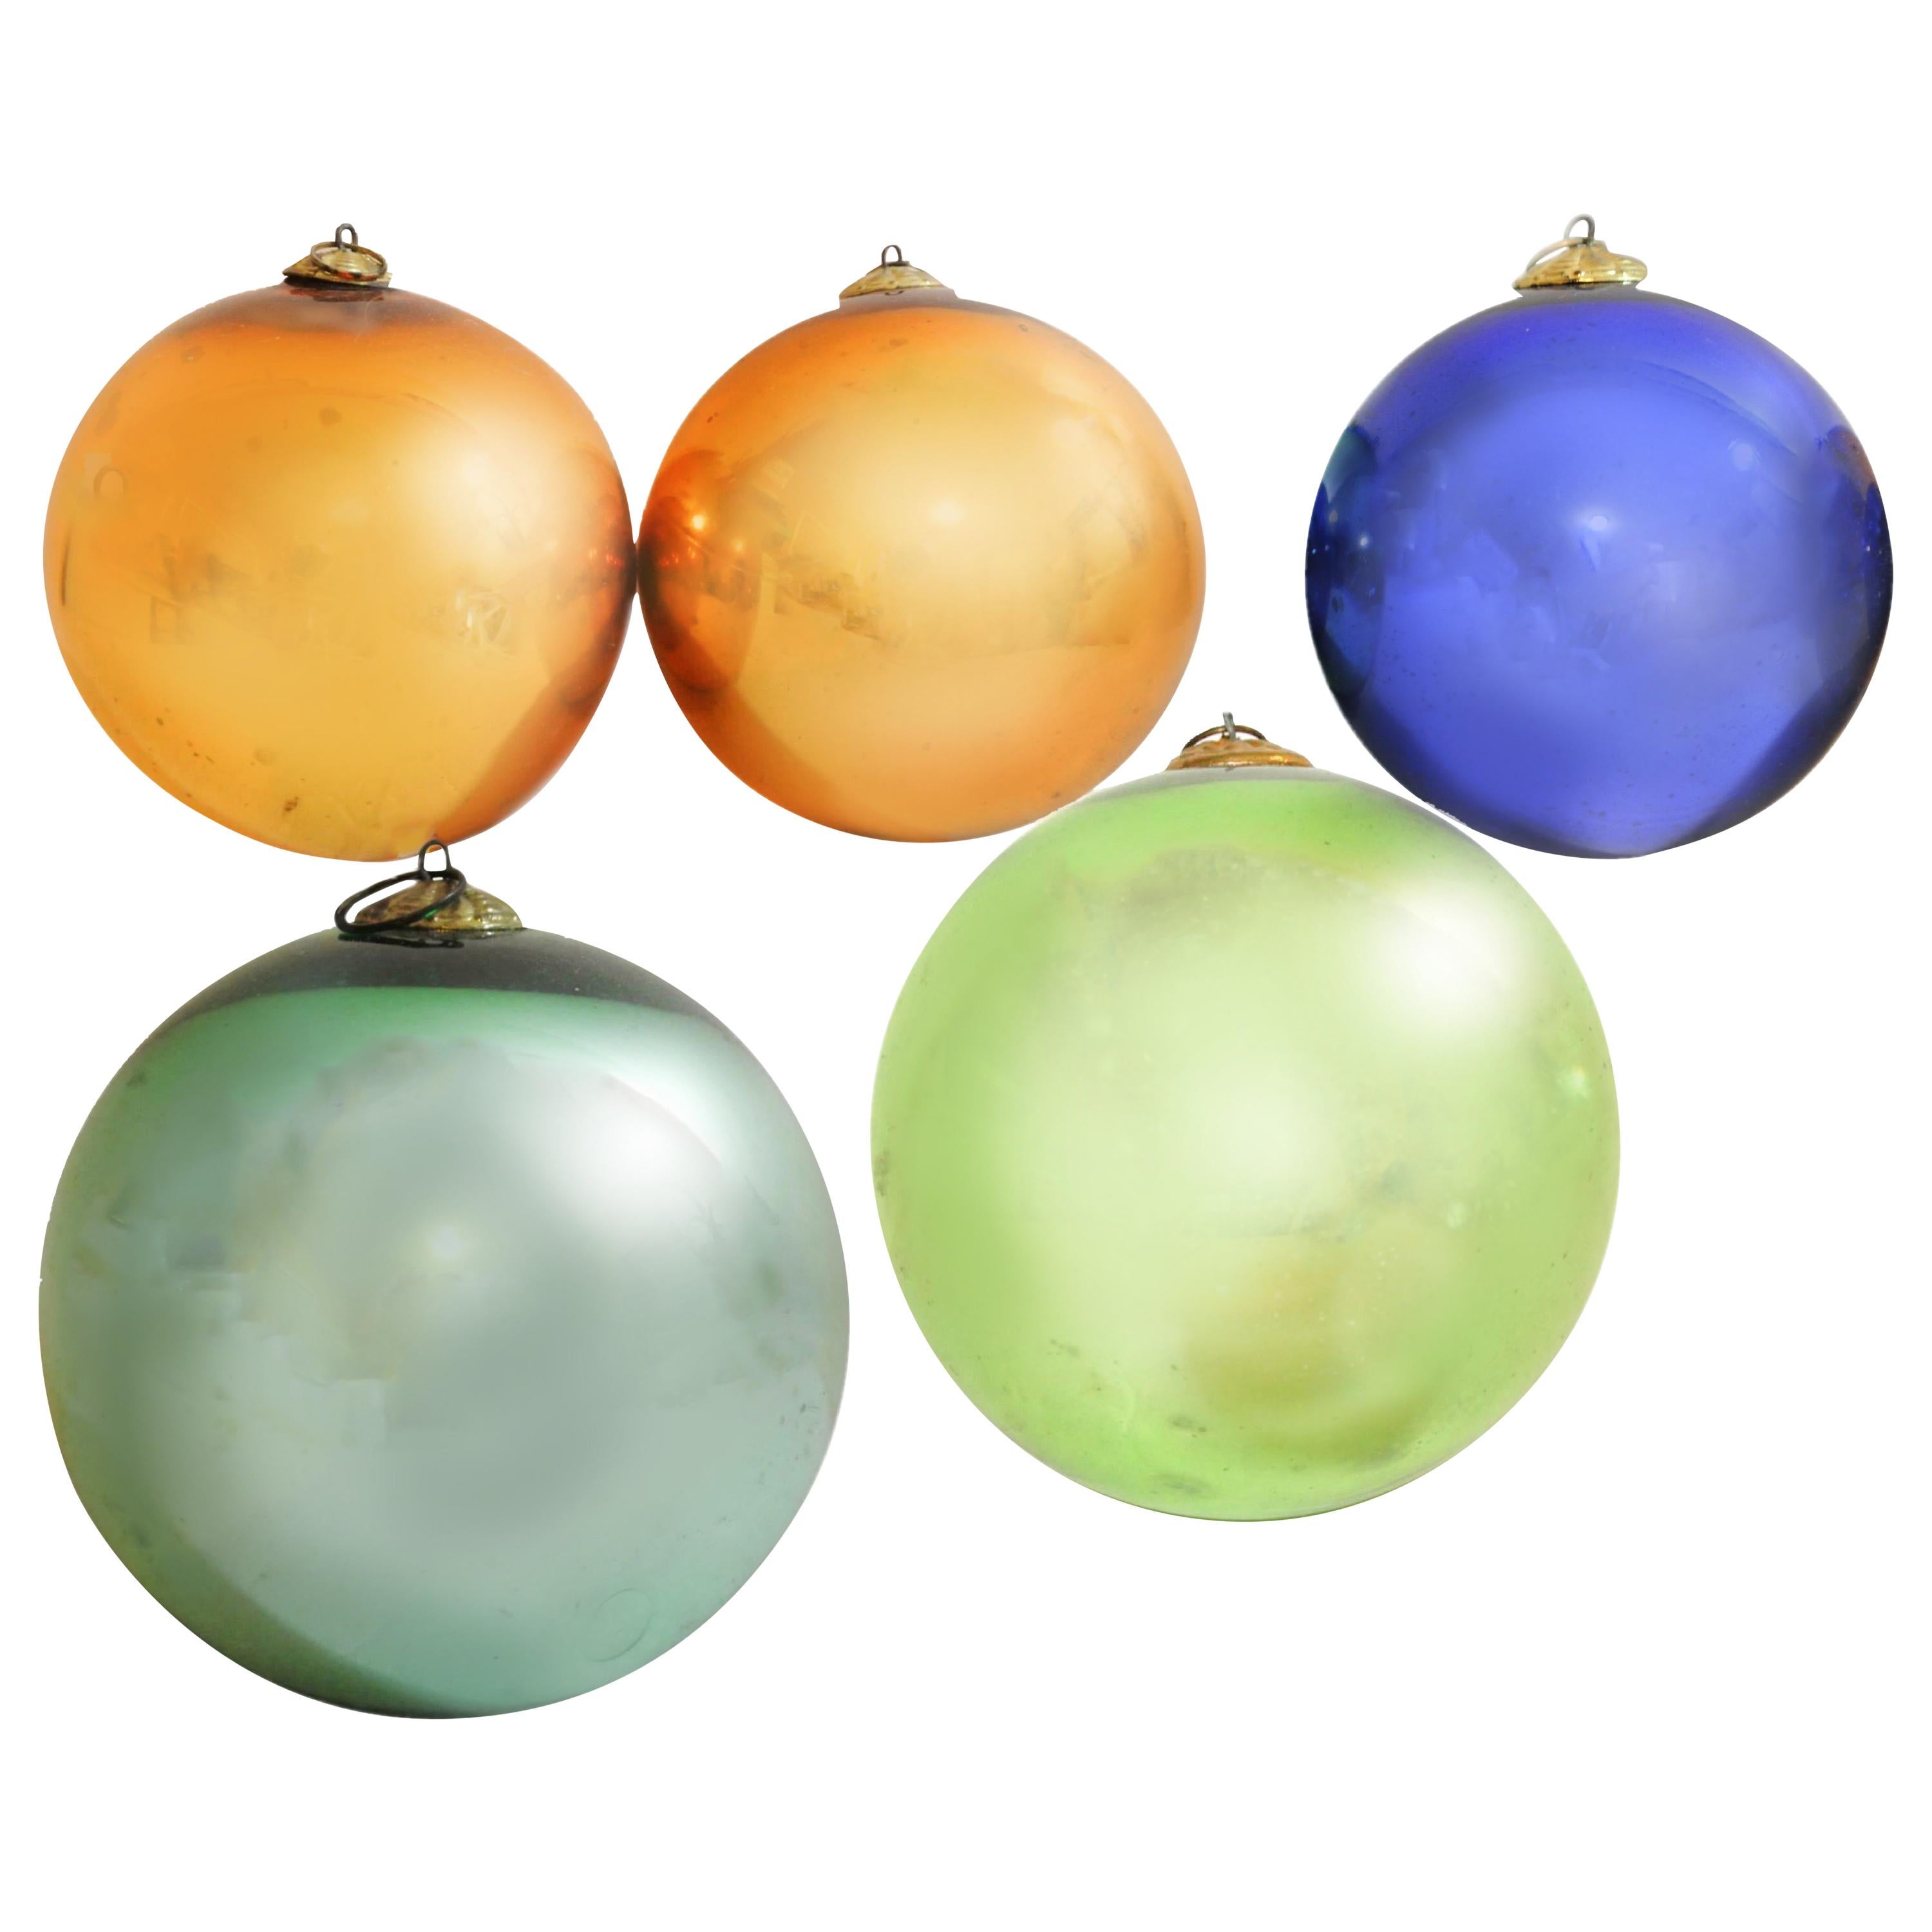 Details about   Vintage 1950's Orig Box Small Mercury Glass Kugel Christmas Tree Ornament Balls 